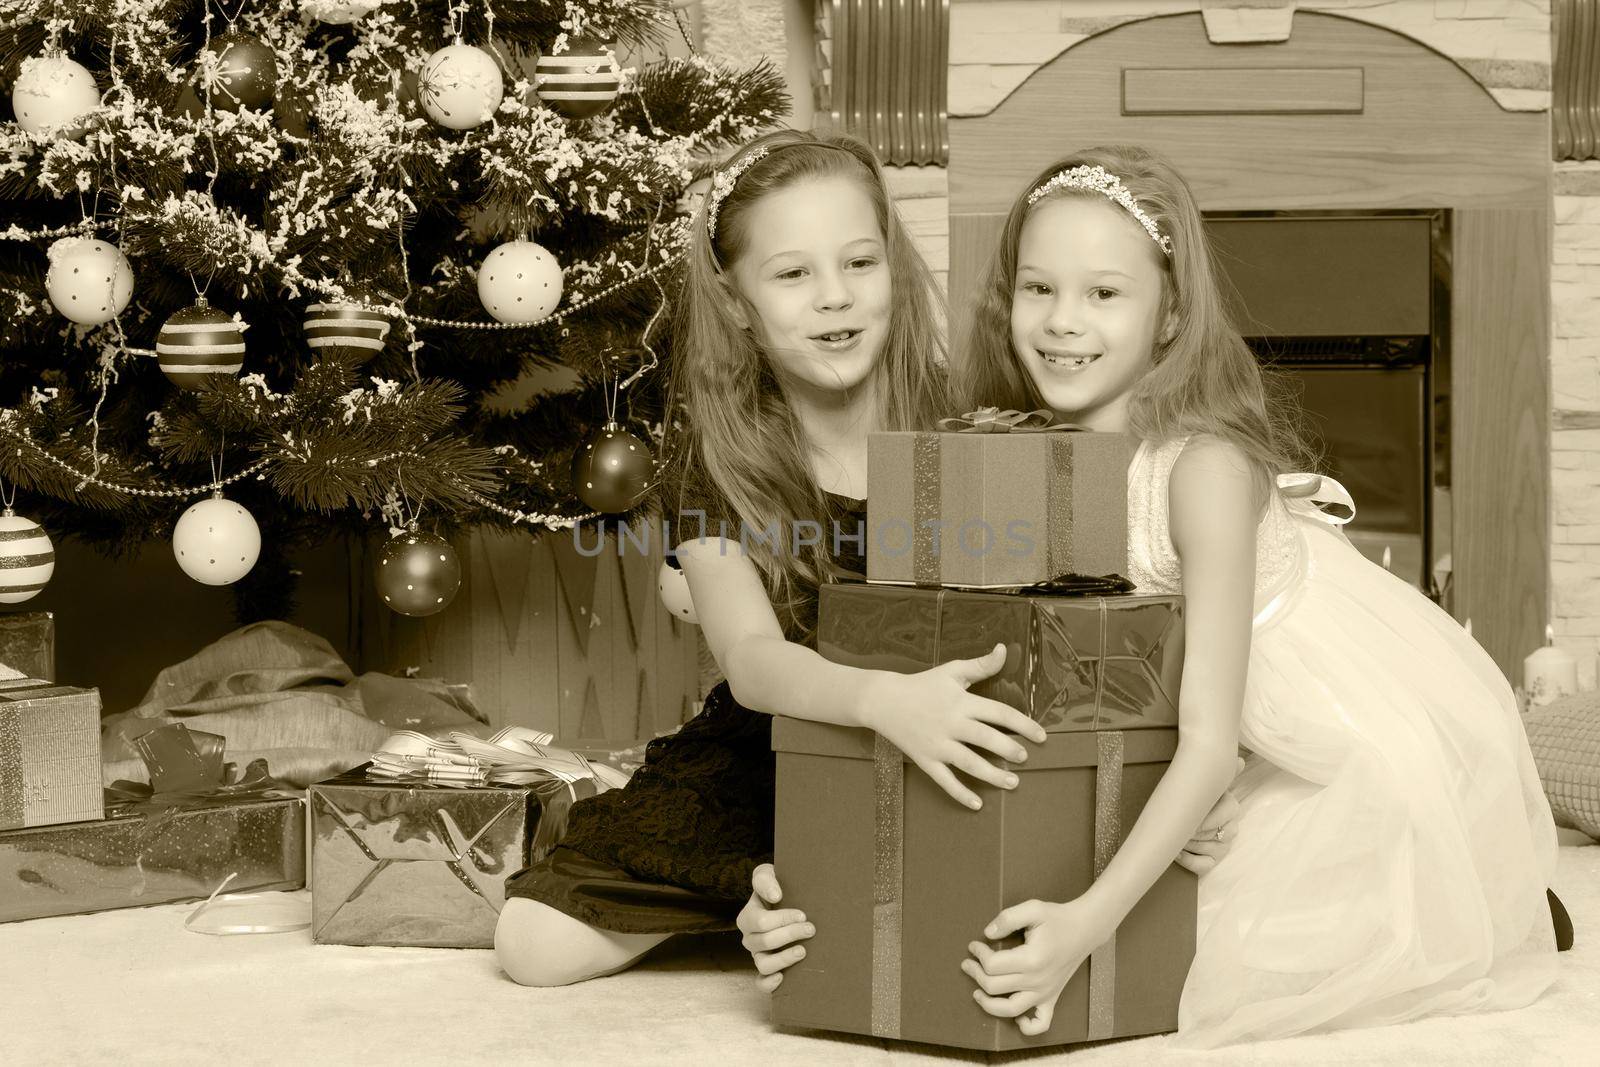 Girls twins with gifts e Christmas tree. by kolesnikov_studio